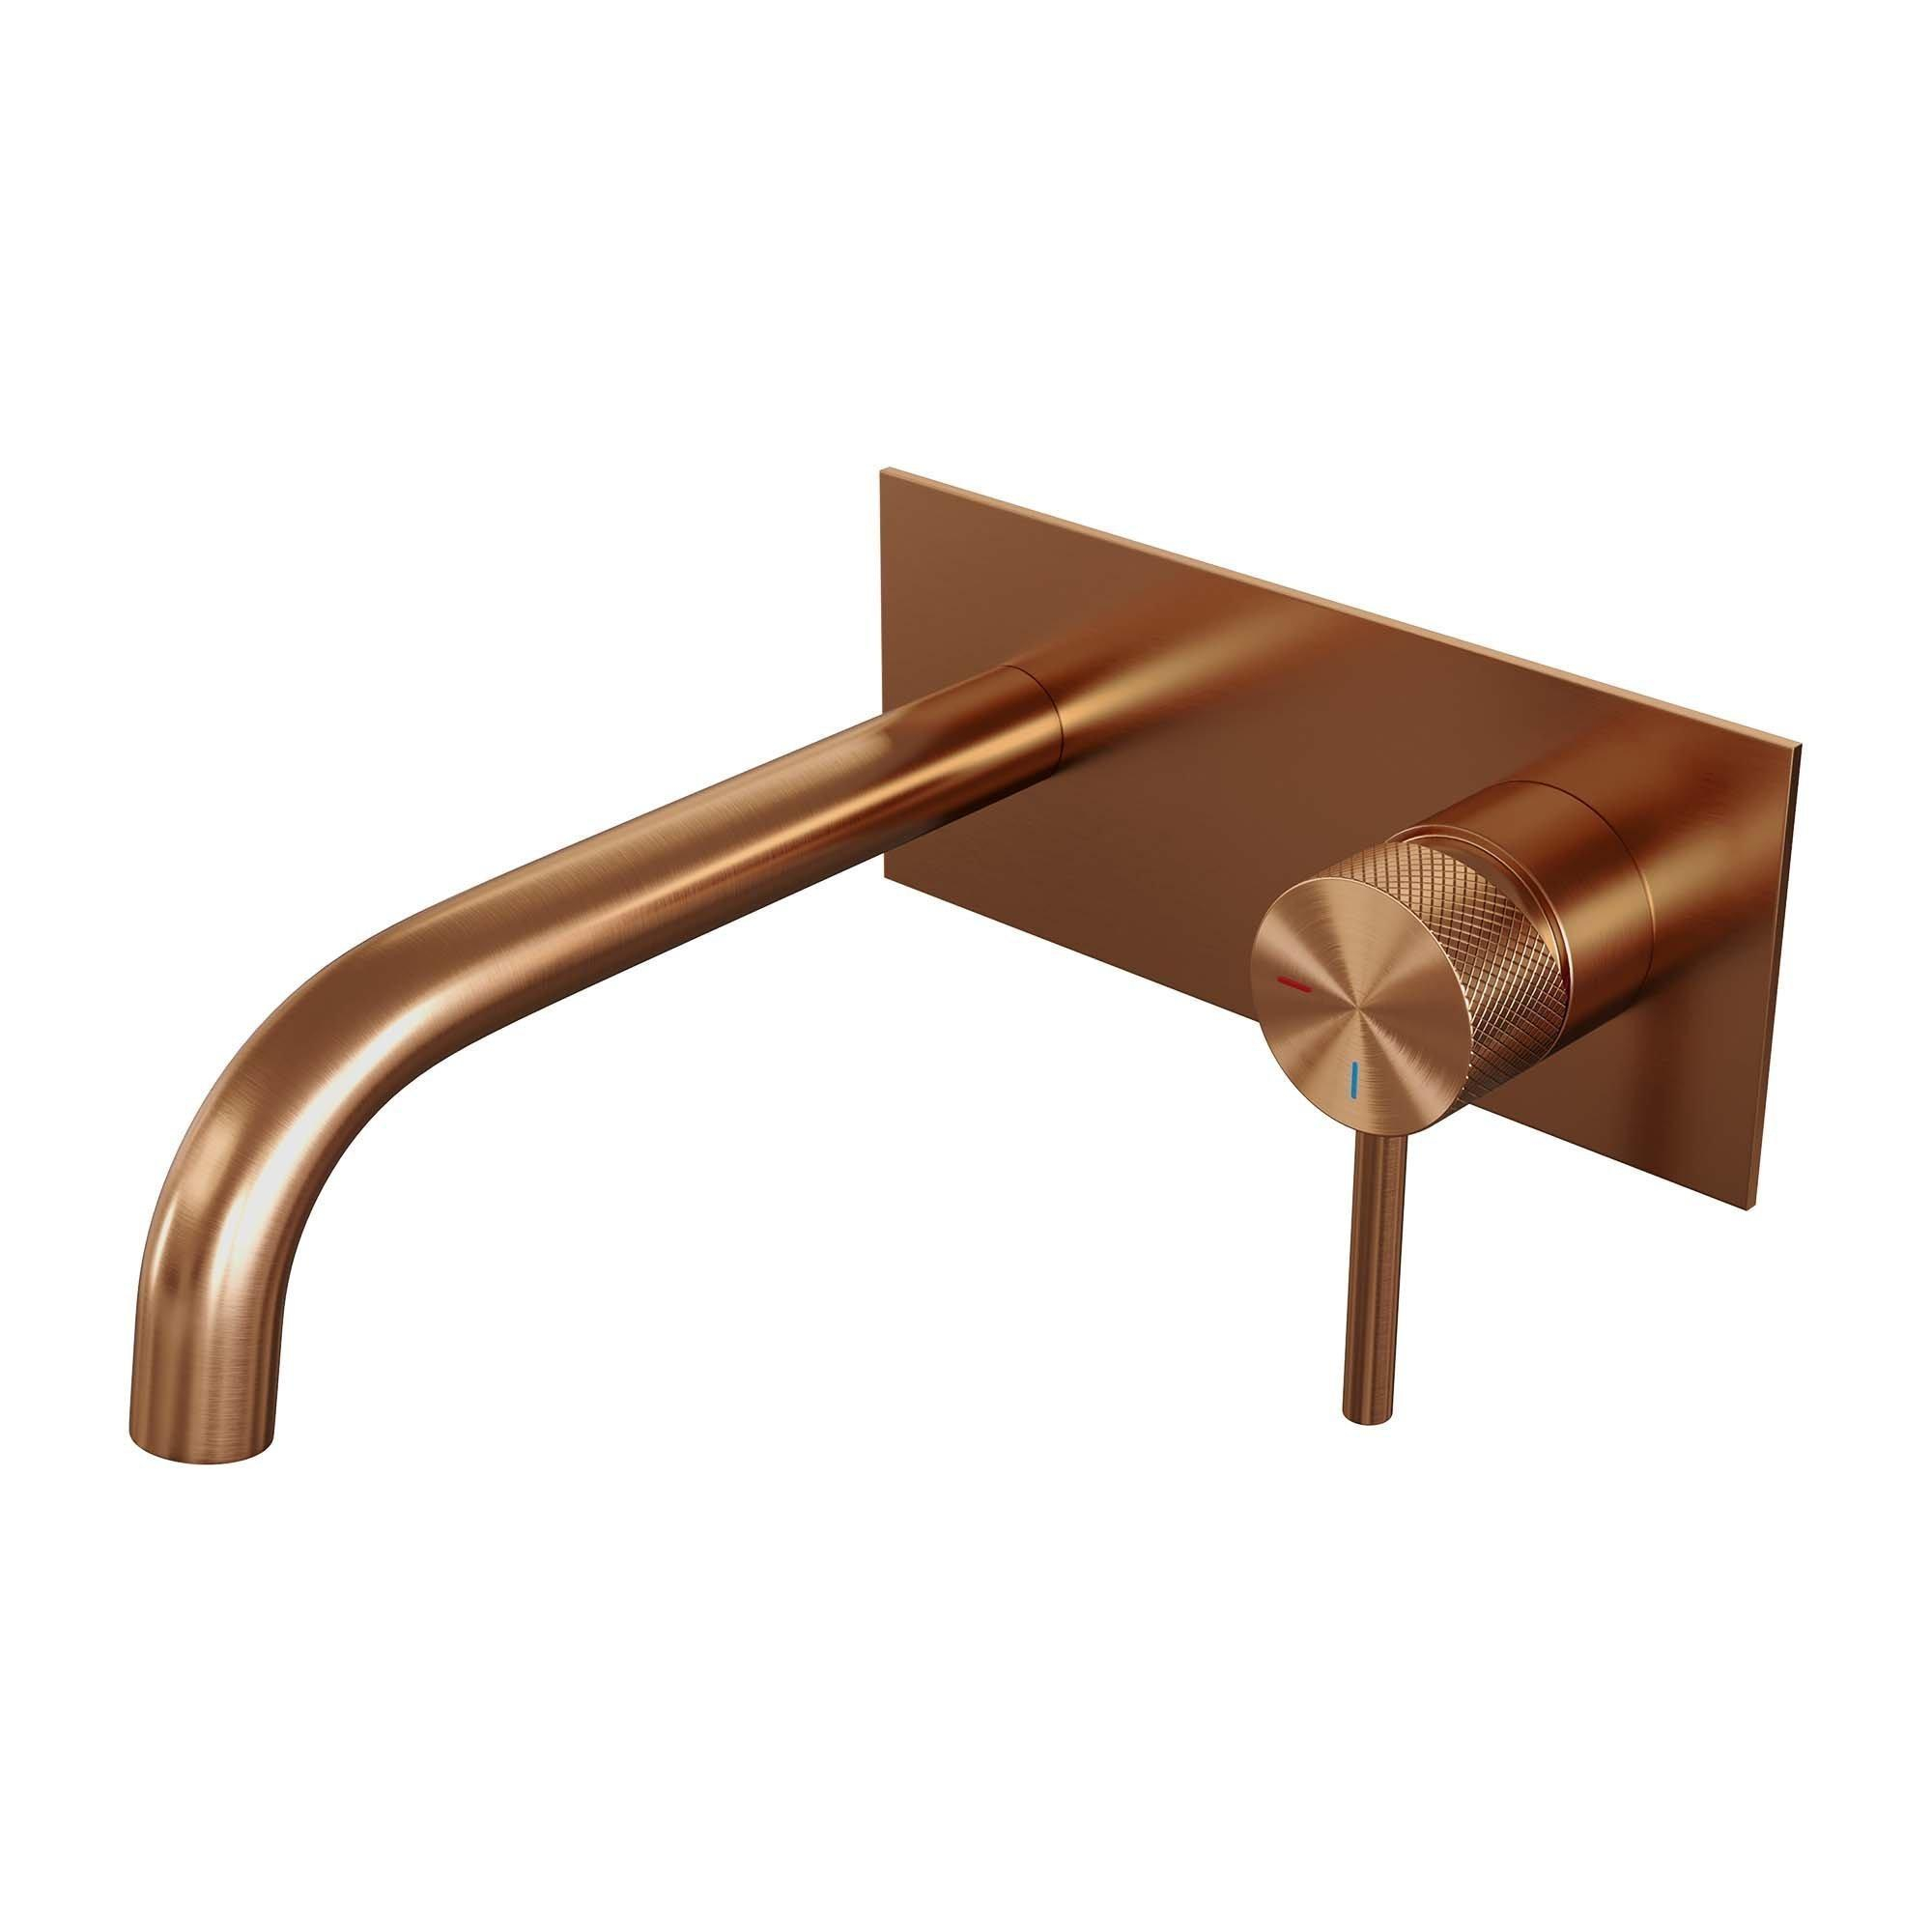 https://static.rorix.nl/image/product/overig/2000x2000/167e0bc386d021447daf437148a1df66.jpg/brauer-copper-carving-robinet-lavabo-encastrable-avec-bec-courbe-gauche-et-plaque-rectangulaire-modele-a1-levier-carving-cuivre-brosse-pvd-sw715507.jpg